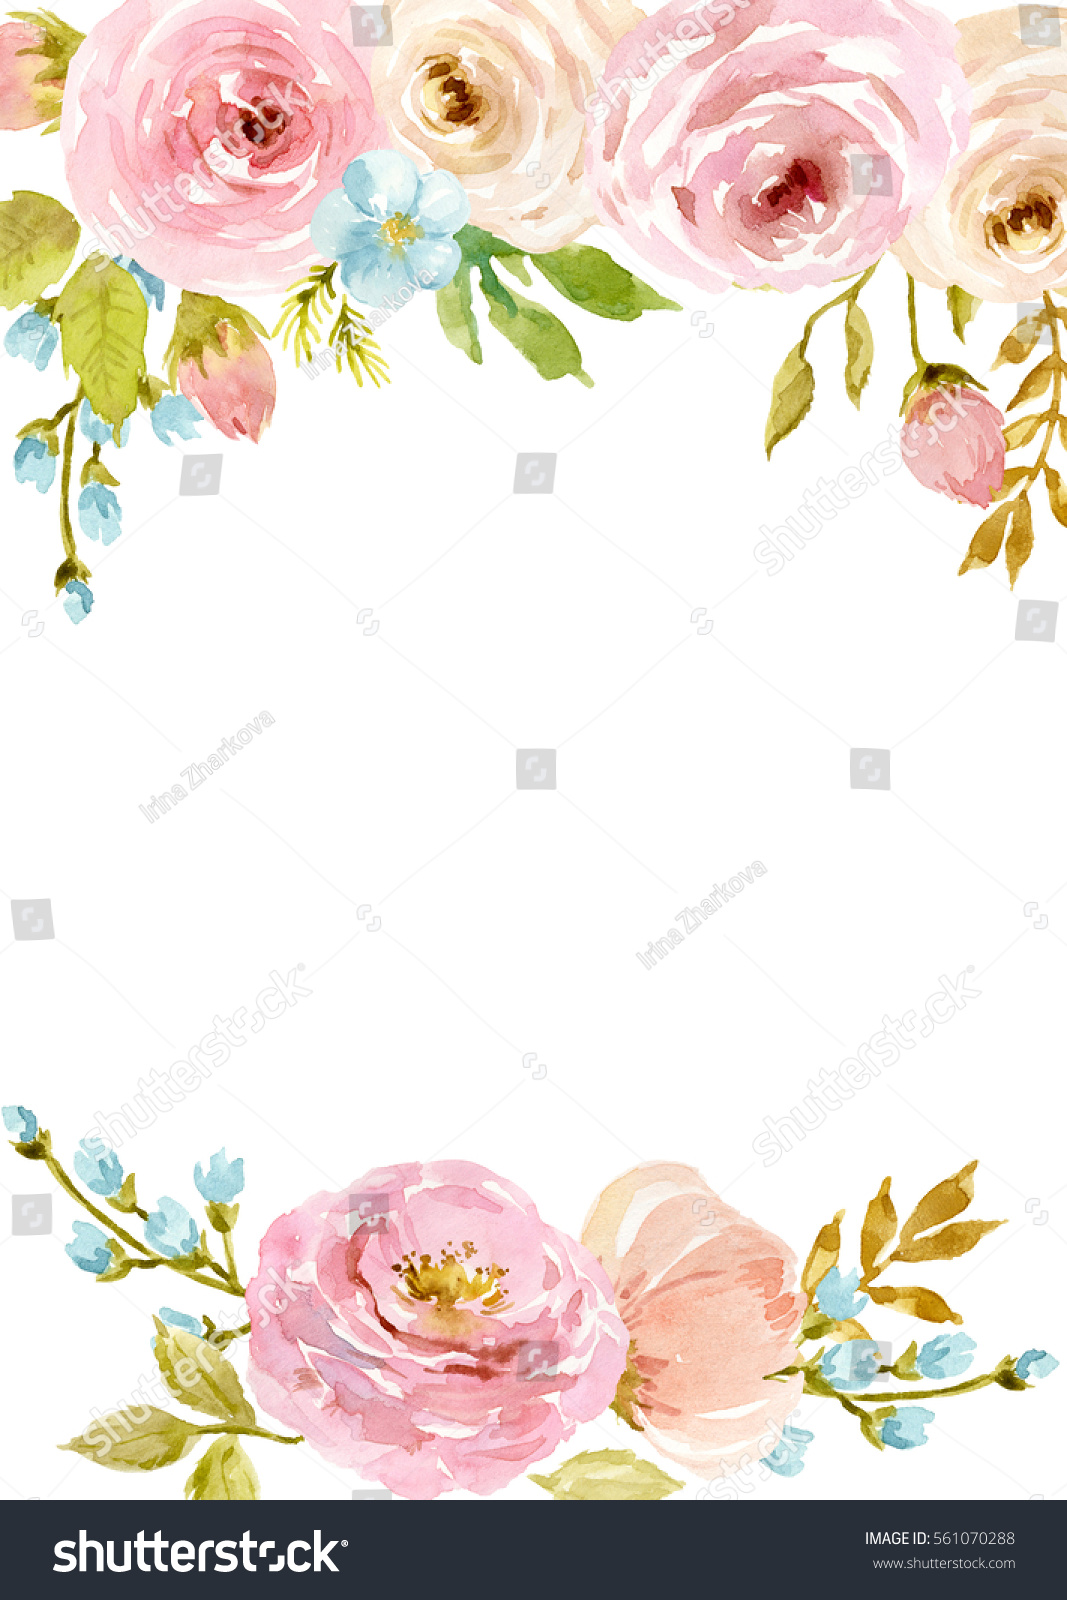 2,355,606 Watercolor floral Images, Stock Photos & Vectors | Shutterstock